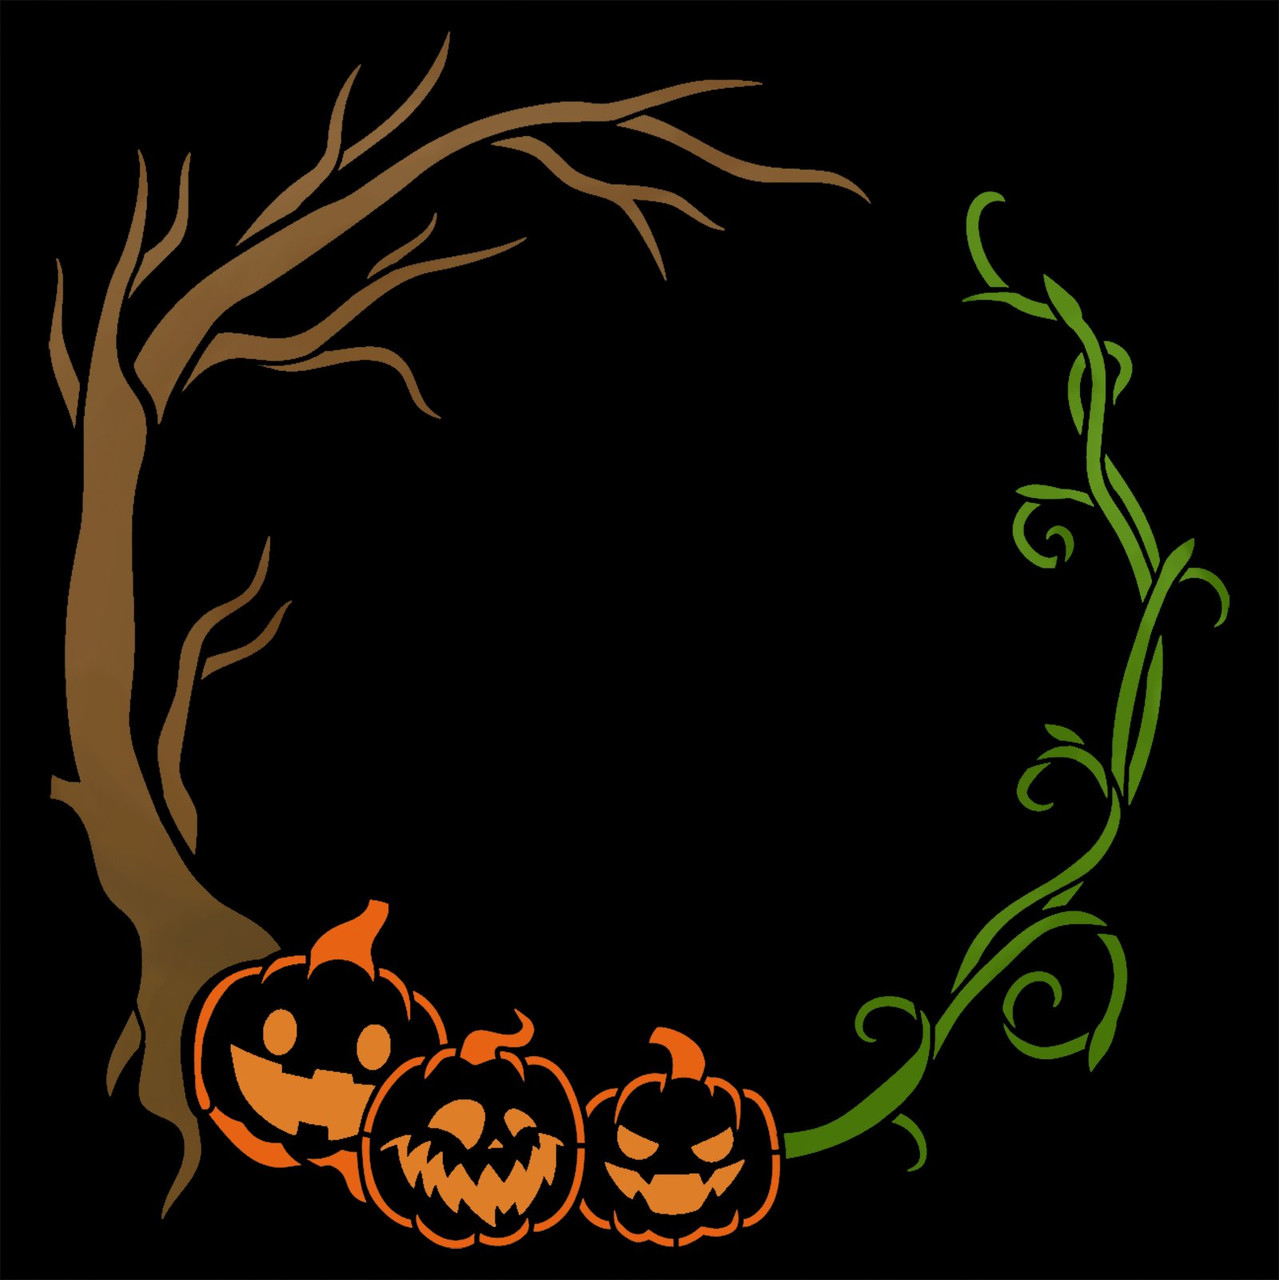 Jack-o-Lantern Round Frame Stencil by StudioR12 - Select Size - USA Made - Craft DIY Spooky Halloween Pumpkin Home Decor | Paint Fall Seasonal Wood Sign | Reusable Template